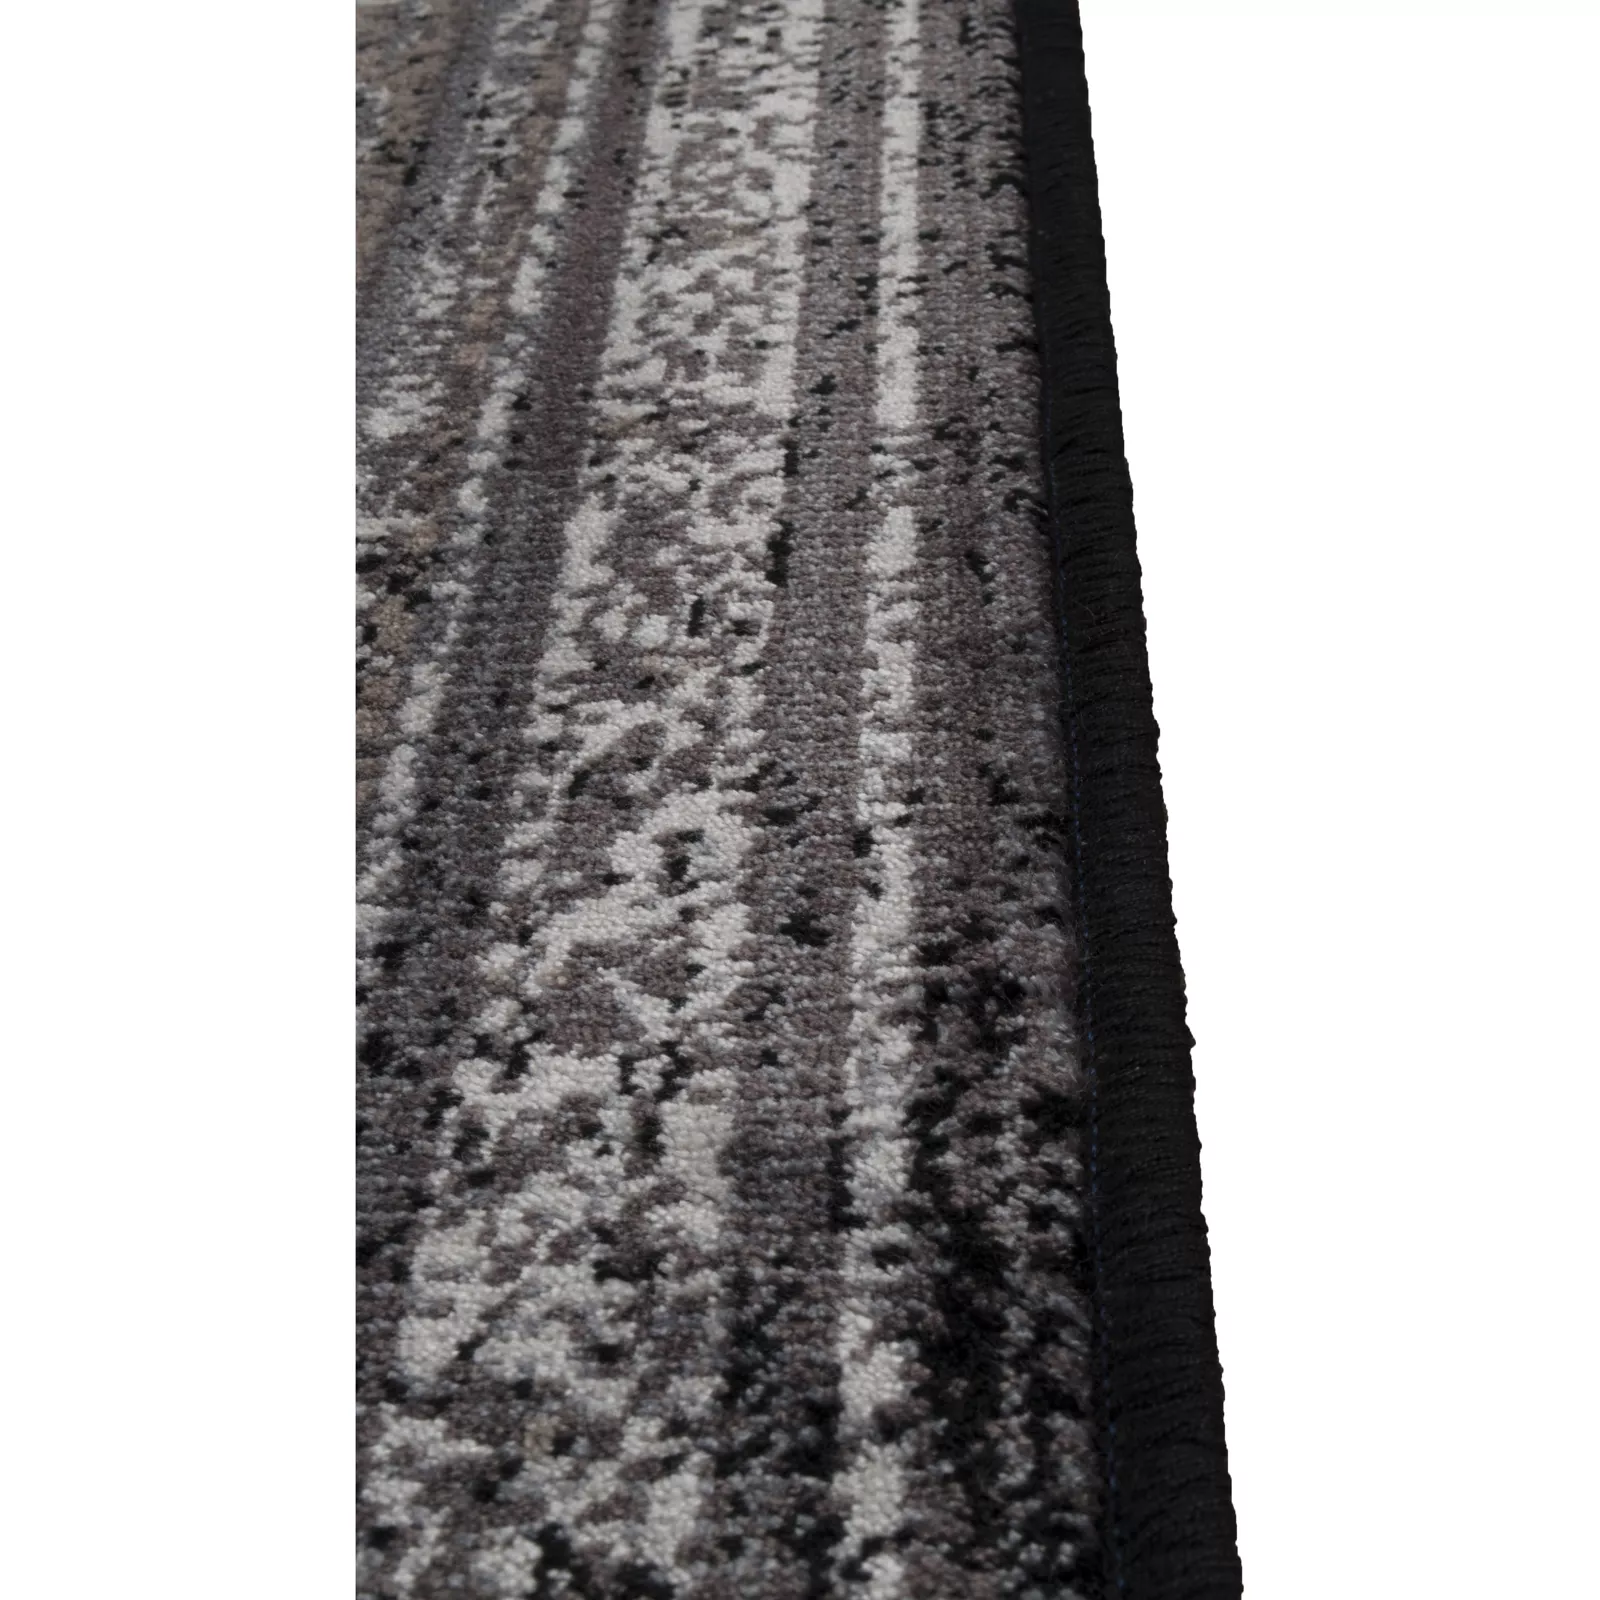 Vloerkleed (200x300cm) Rugged - Zwart/Grijs